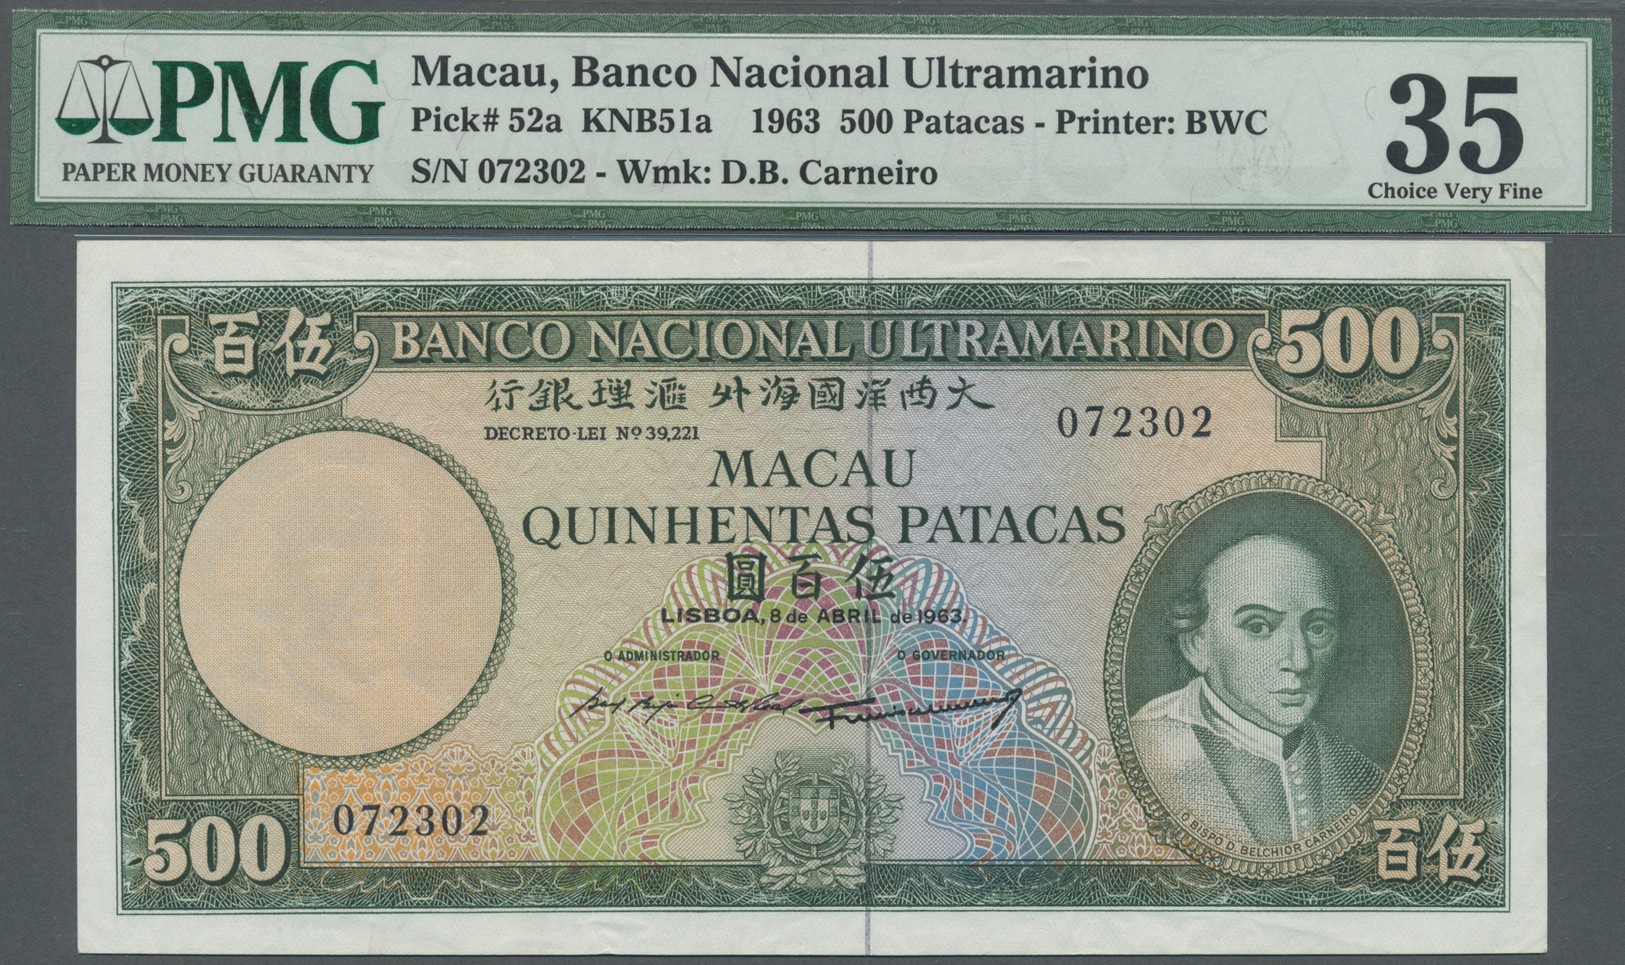 01601 Macau / Macao:  Banco Nacional Ultramarino 500 Patacas April 8th 1963, P.52a, Some Folds And Creases In The Paper - Macau